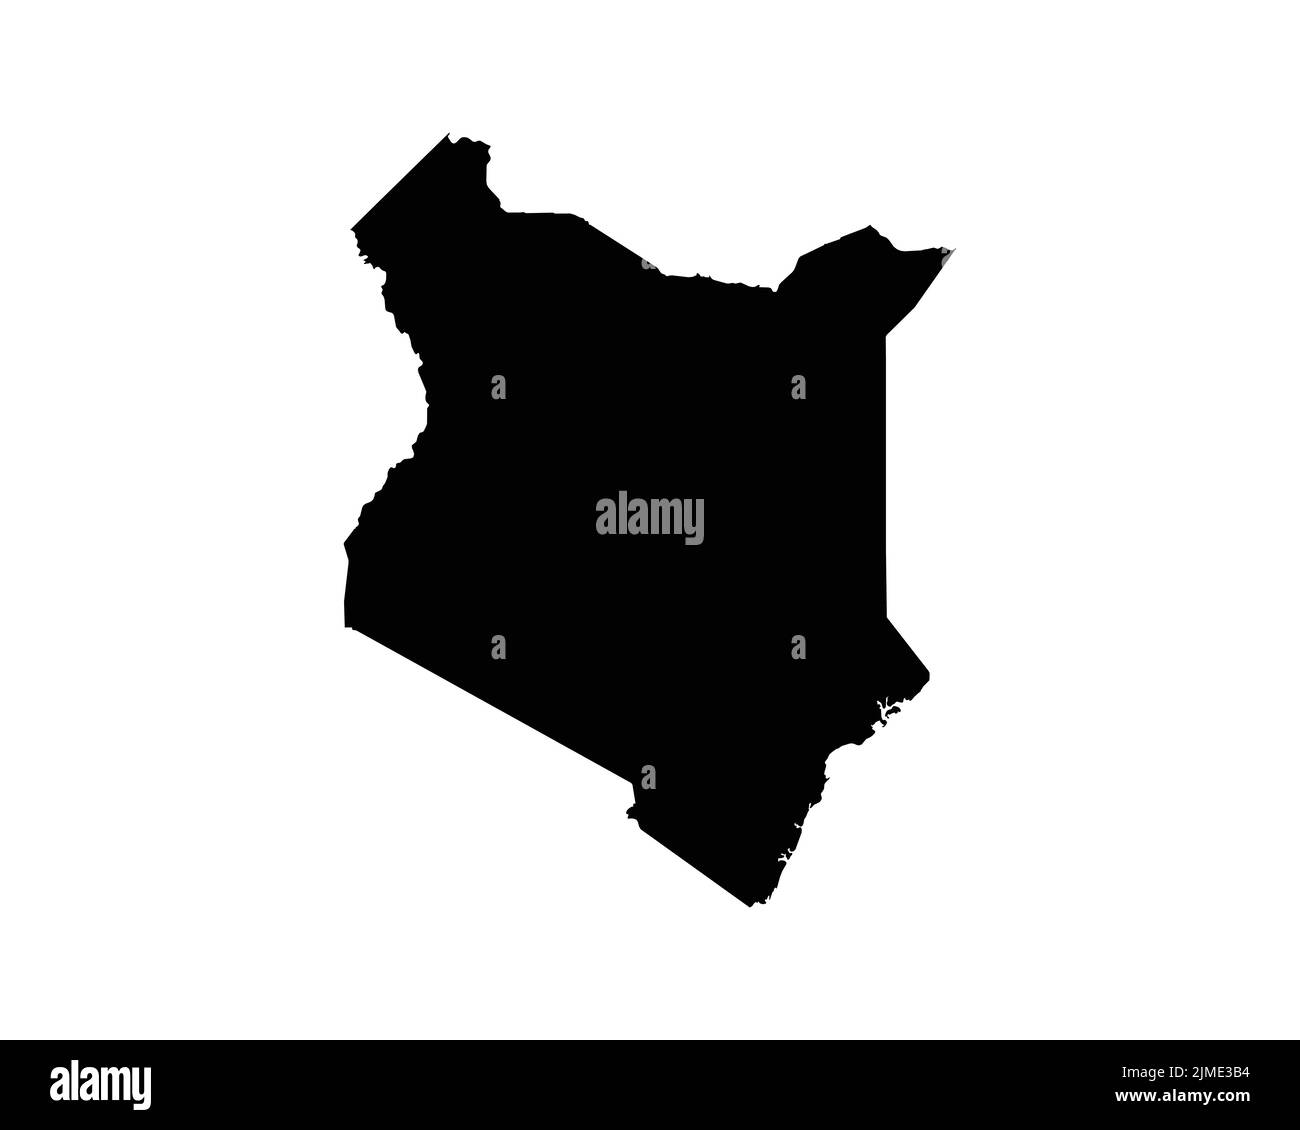 Mappa del Kenya. Mappa del paese del Kenya. Bianco e nero National Nation Outline Geografia Border Boundary Shape Territory Vector Illustration EPS clipart Illustrazione Vettoriale